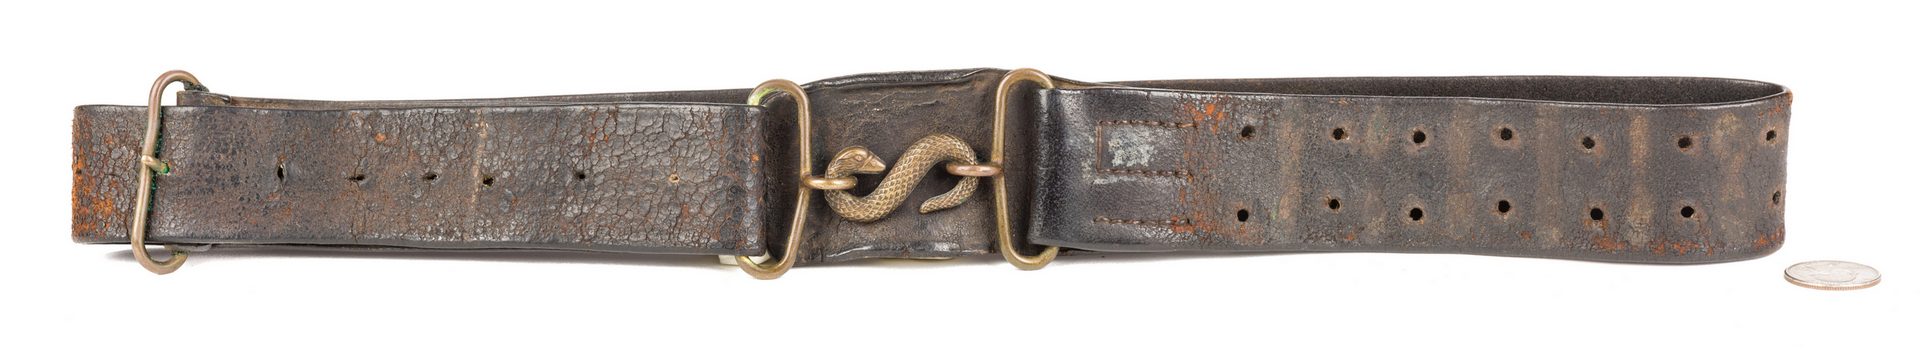 Lot 216: Civil War Waist Belt w/ Snake Buckle, British